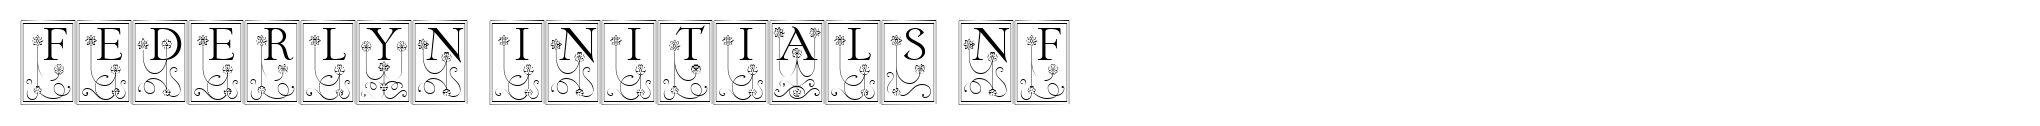 Federlyn Initials NF image